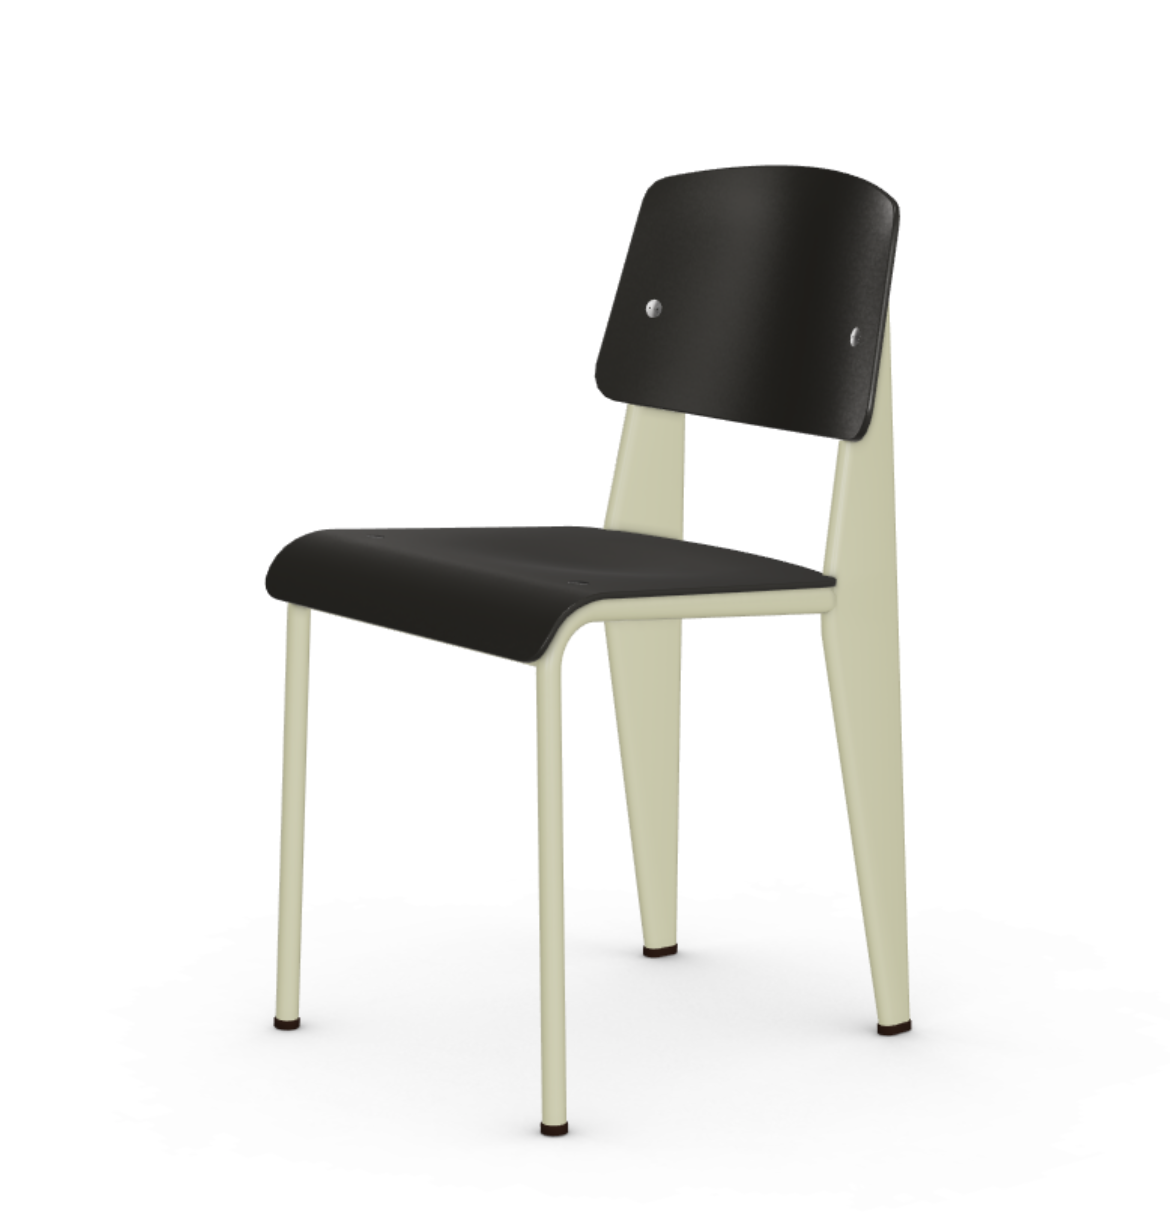 The Wick - Jean Prouvé Standard Chair